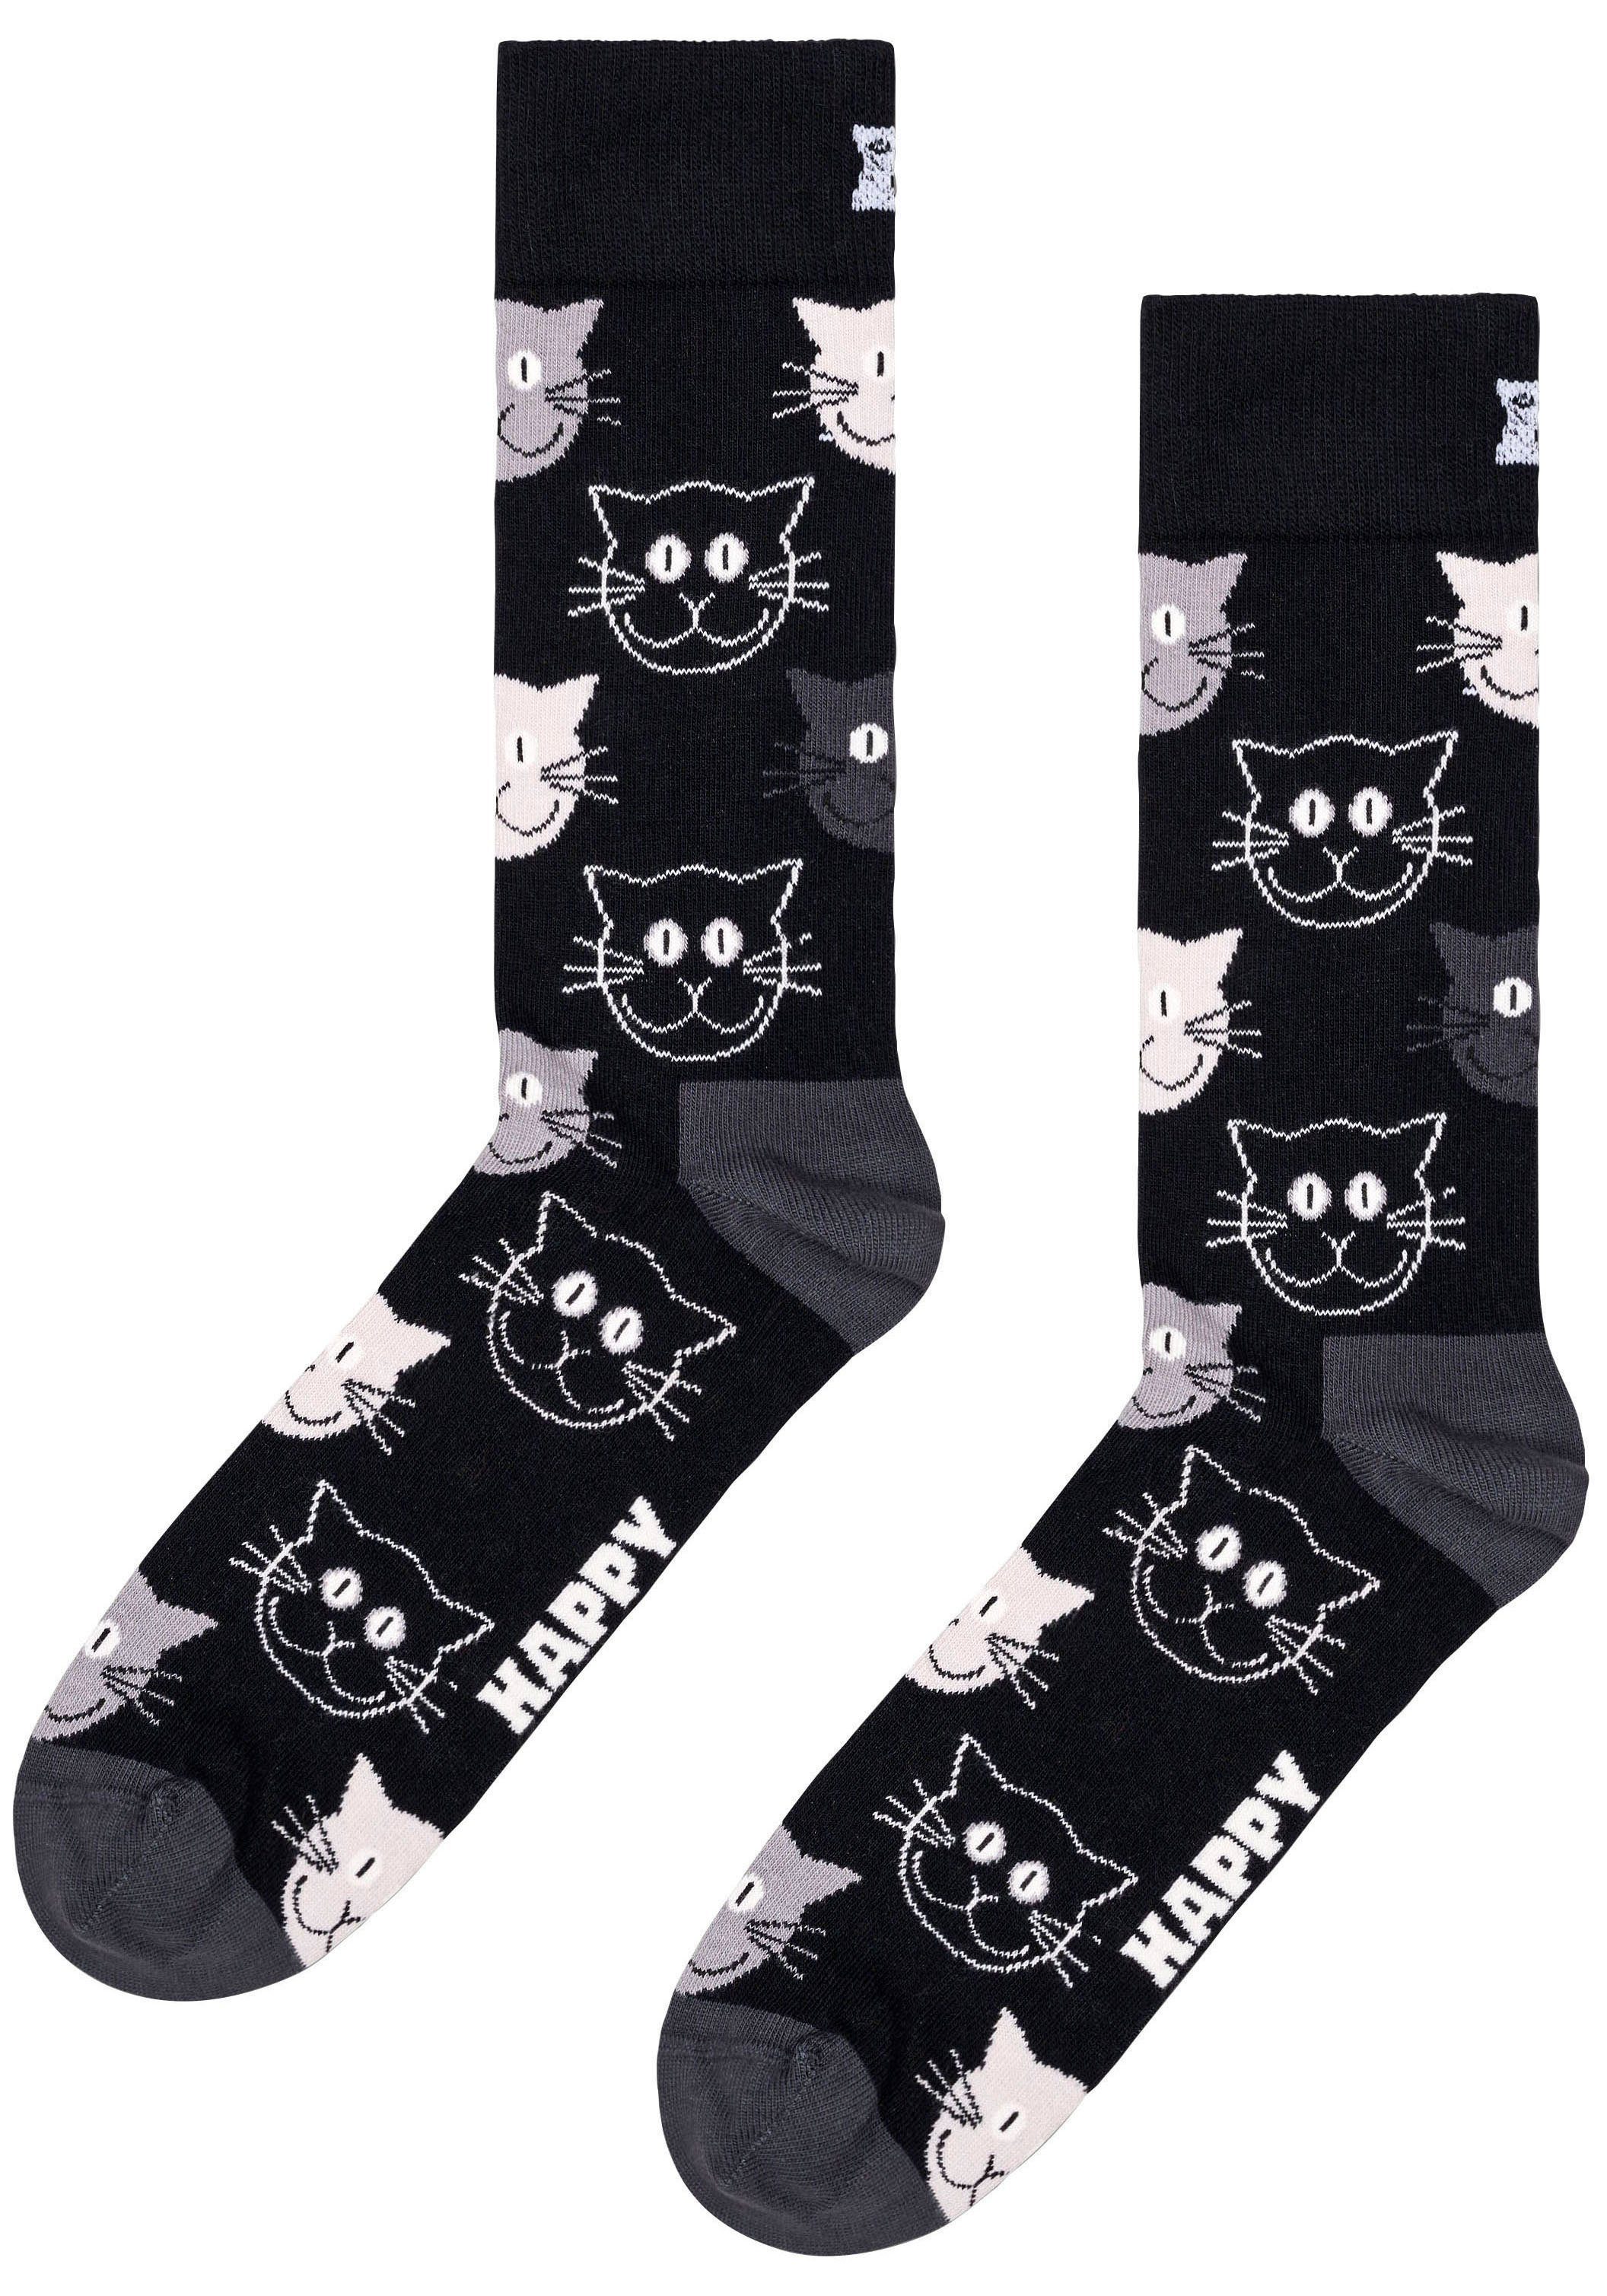 Happy Socks Socken 2 (Packung, Socks Mixed Gift 3-Paar) Katzen-Motive Cat 3-Pack Set Mixed Cat